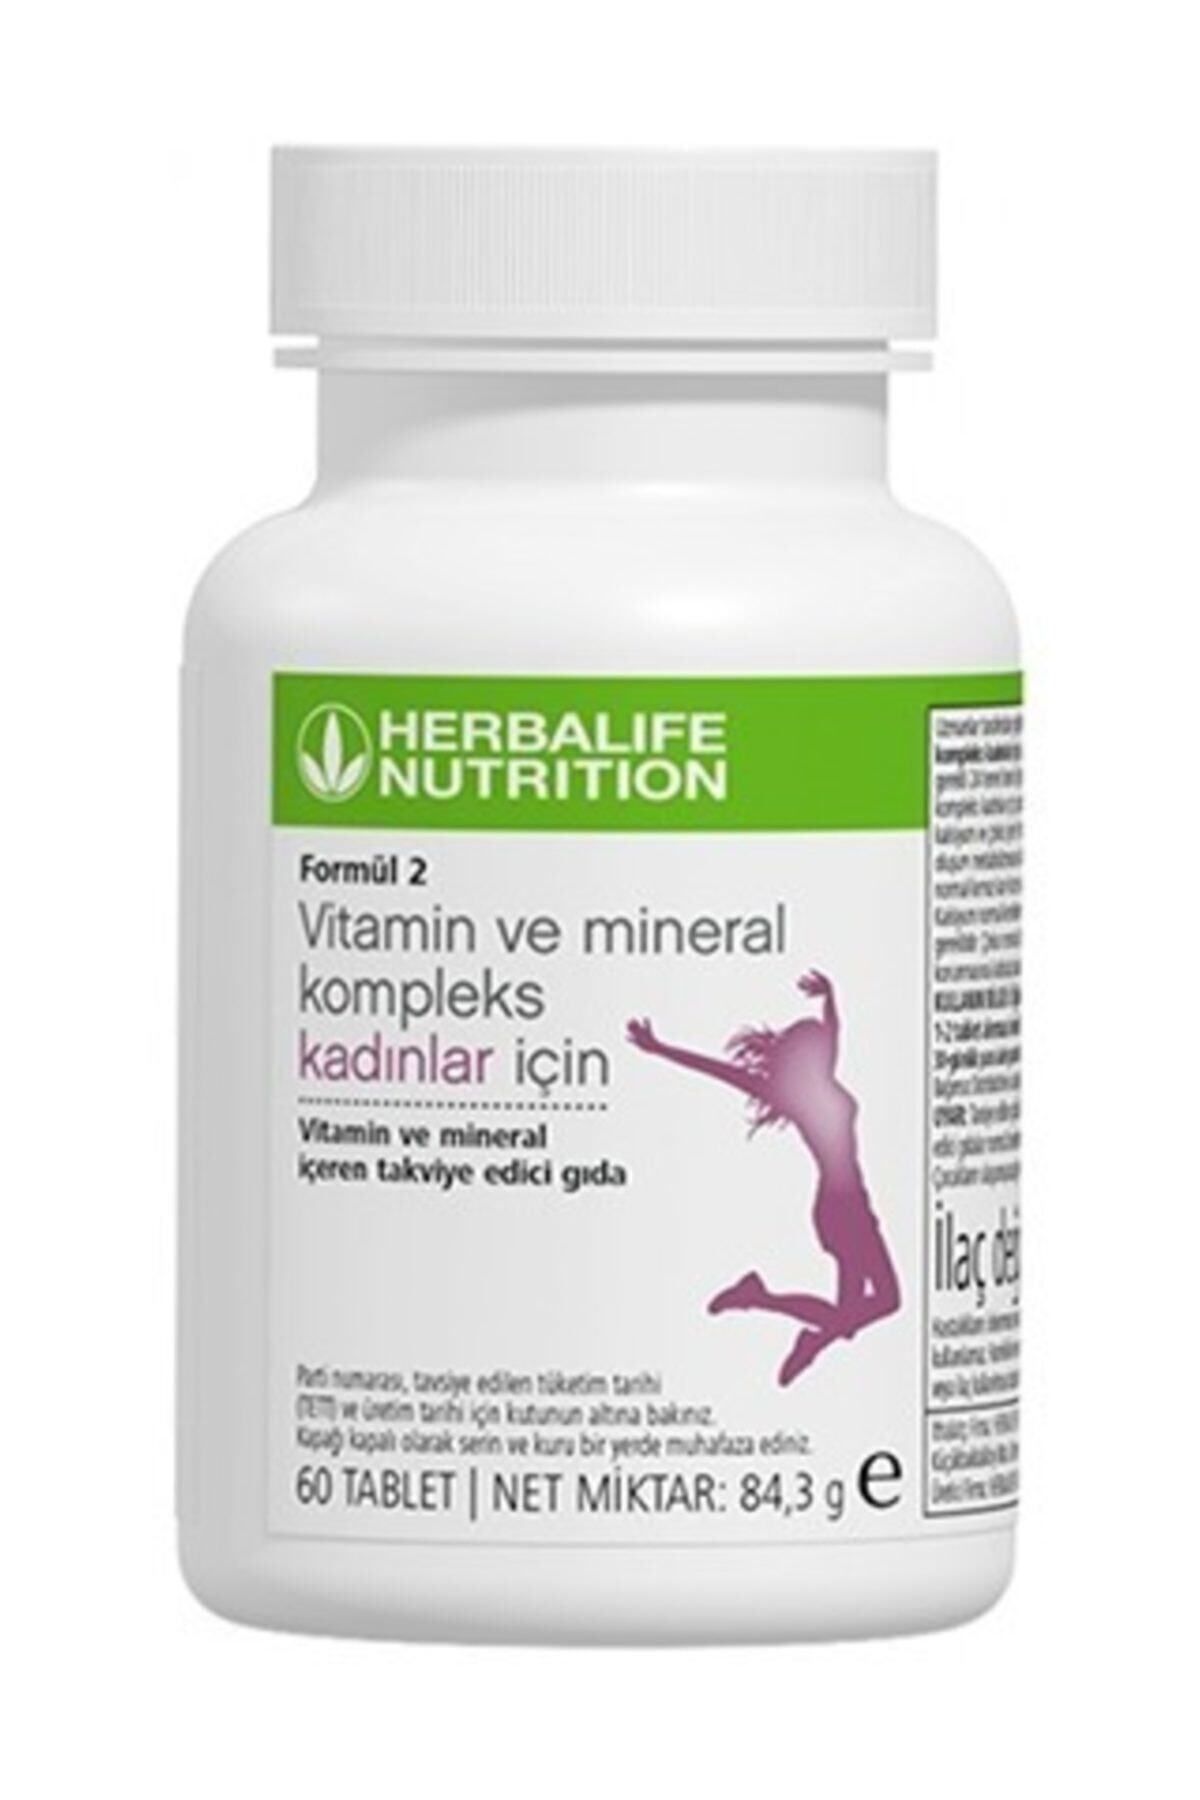 Herbalife Vitamin Ve Mineral Kompleksi Forml 2kadnlar I